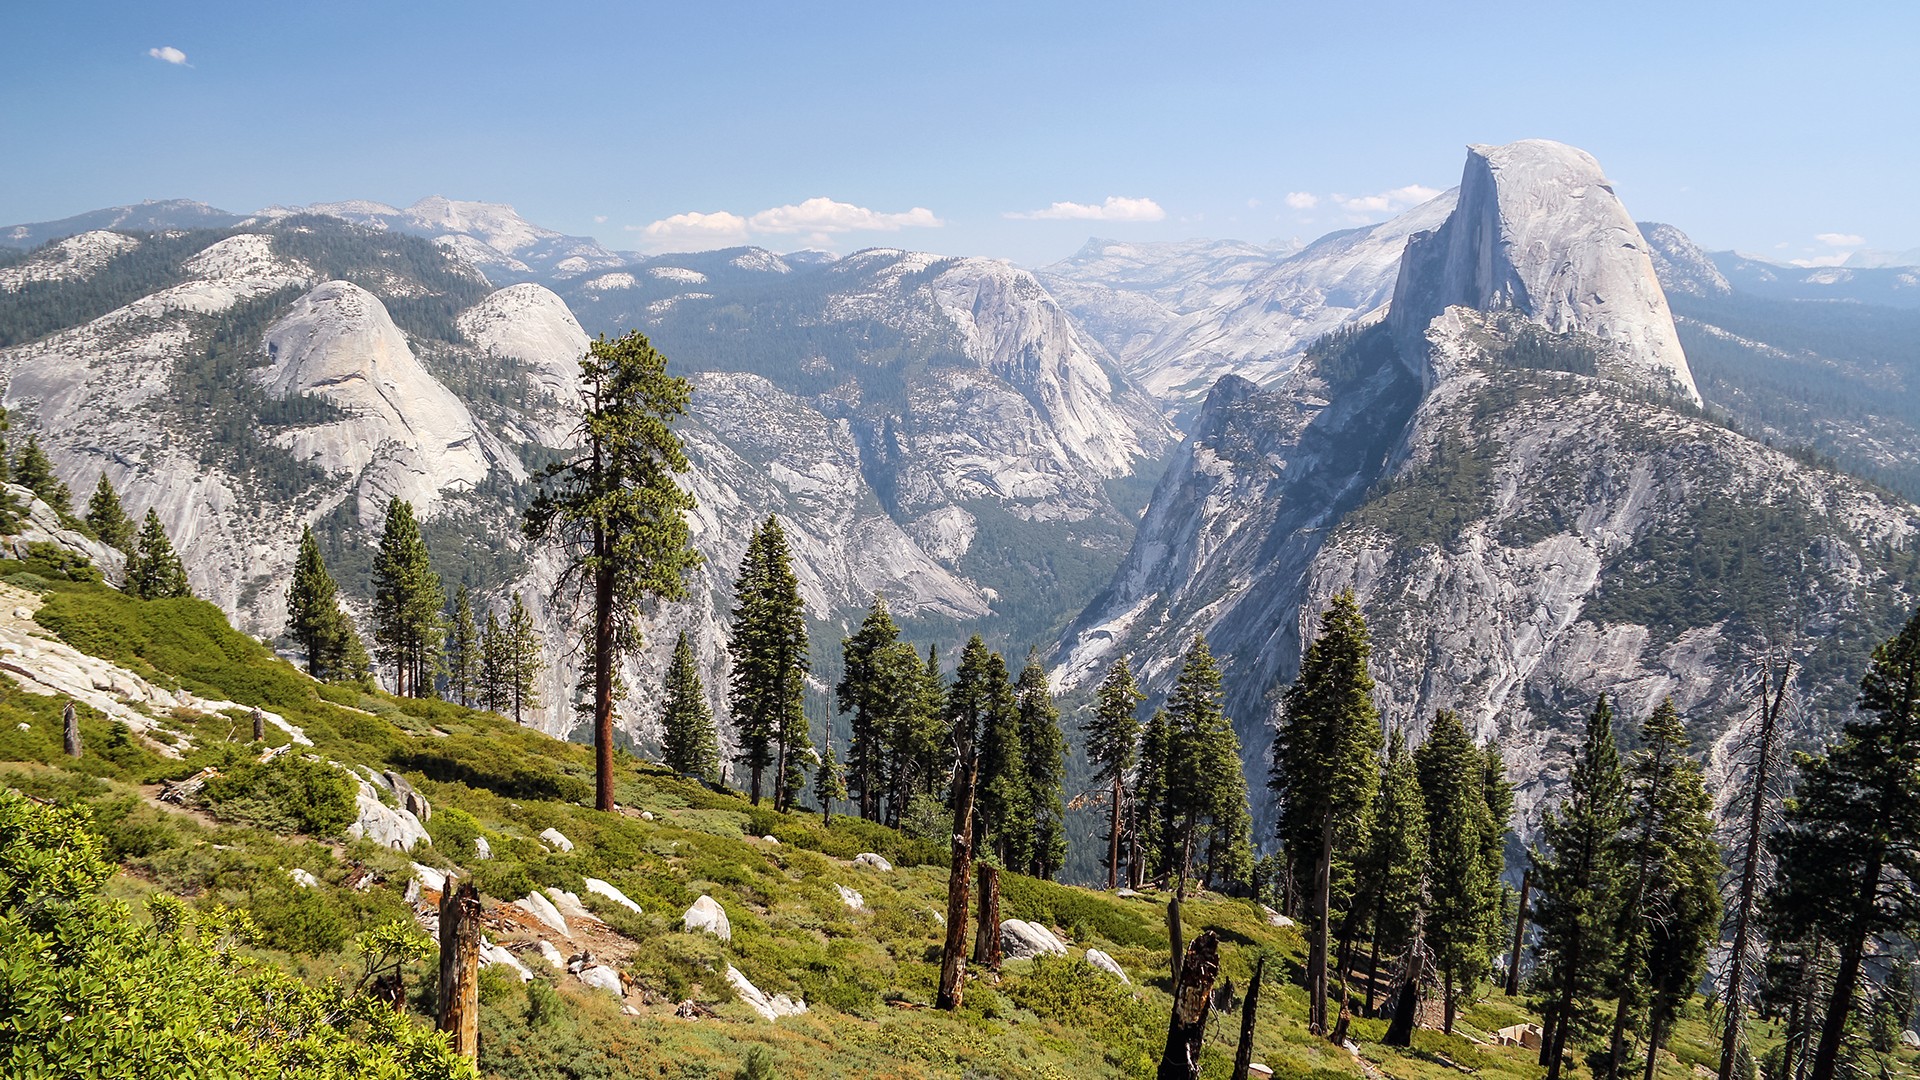 General 1920x1080 Yosemite National Park landscape mountains trees nature USA California rocks